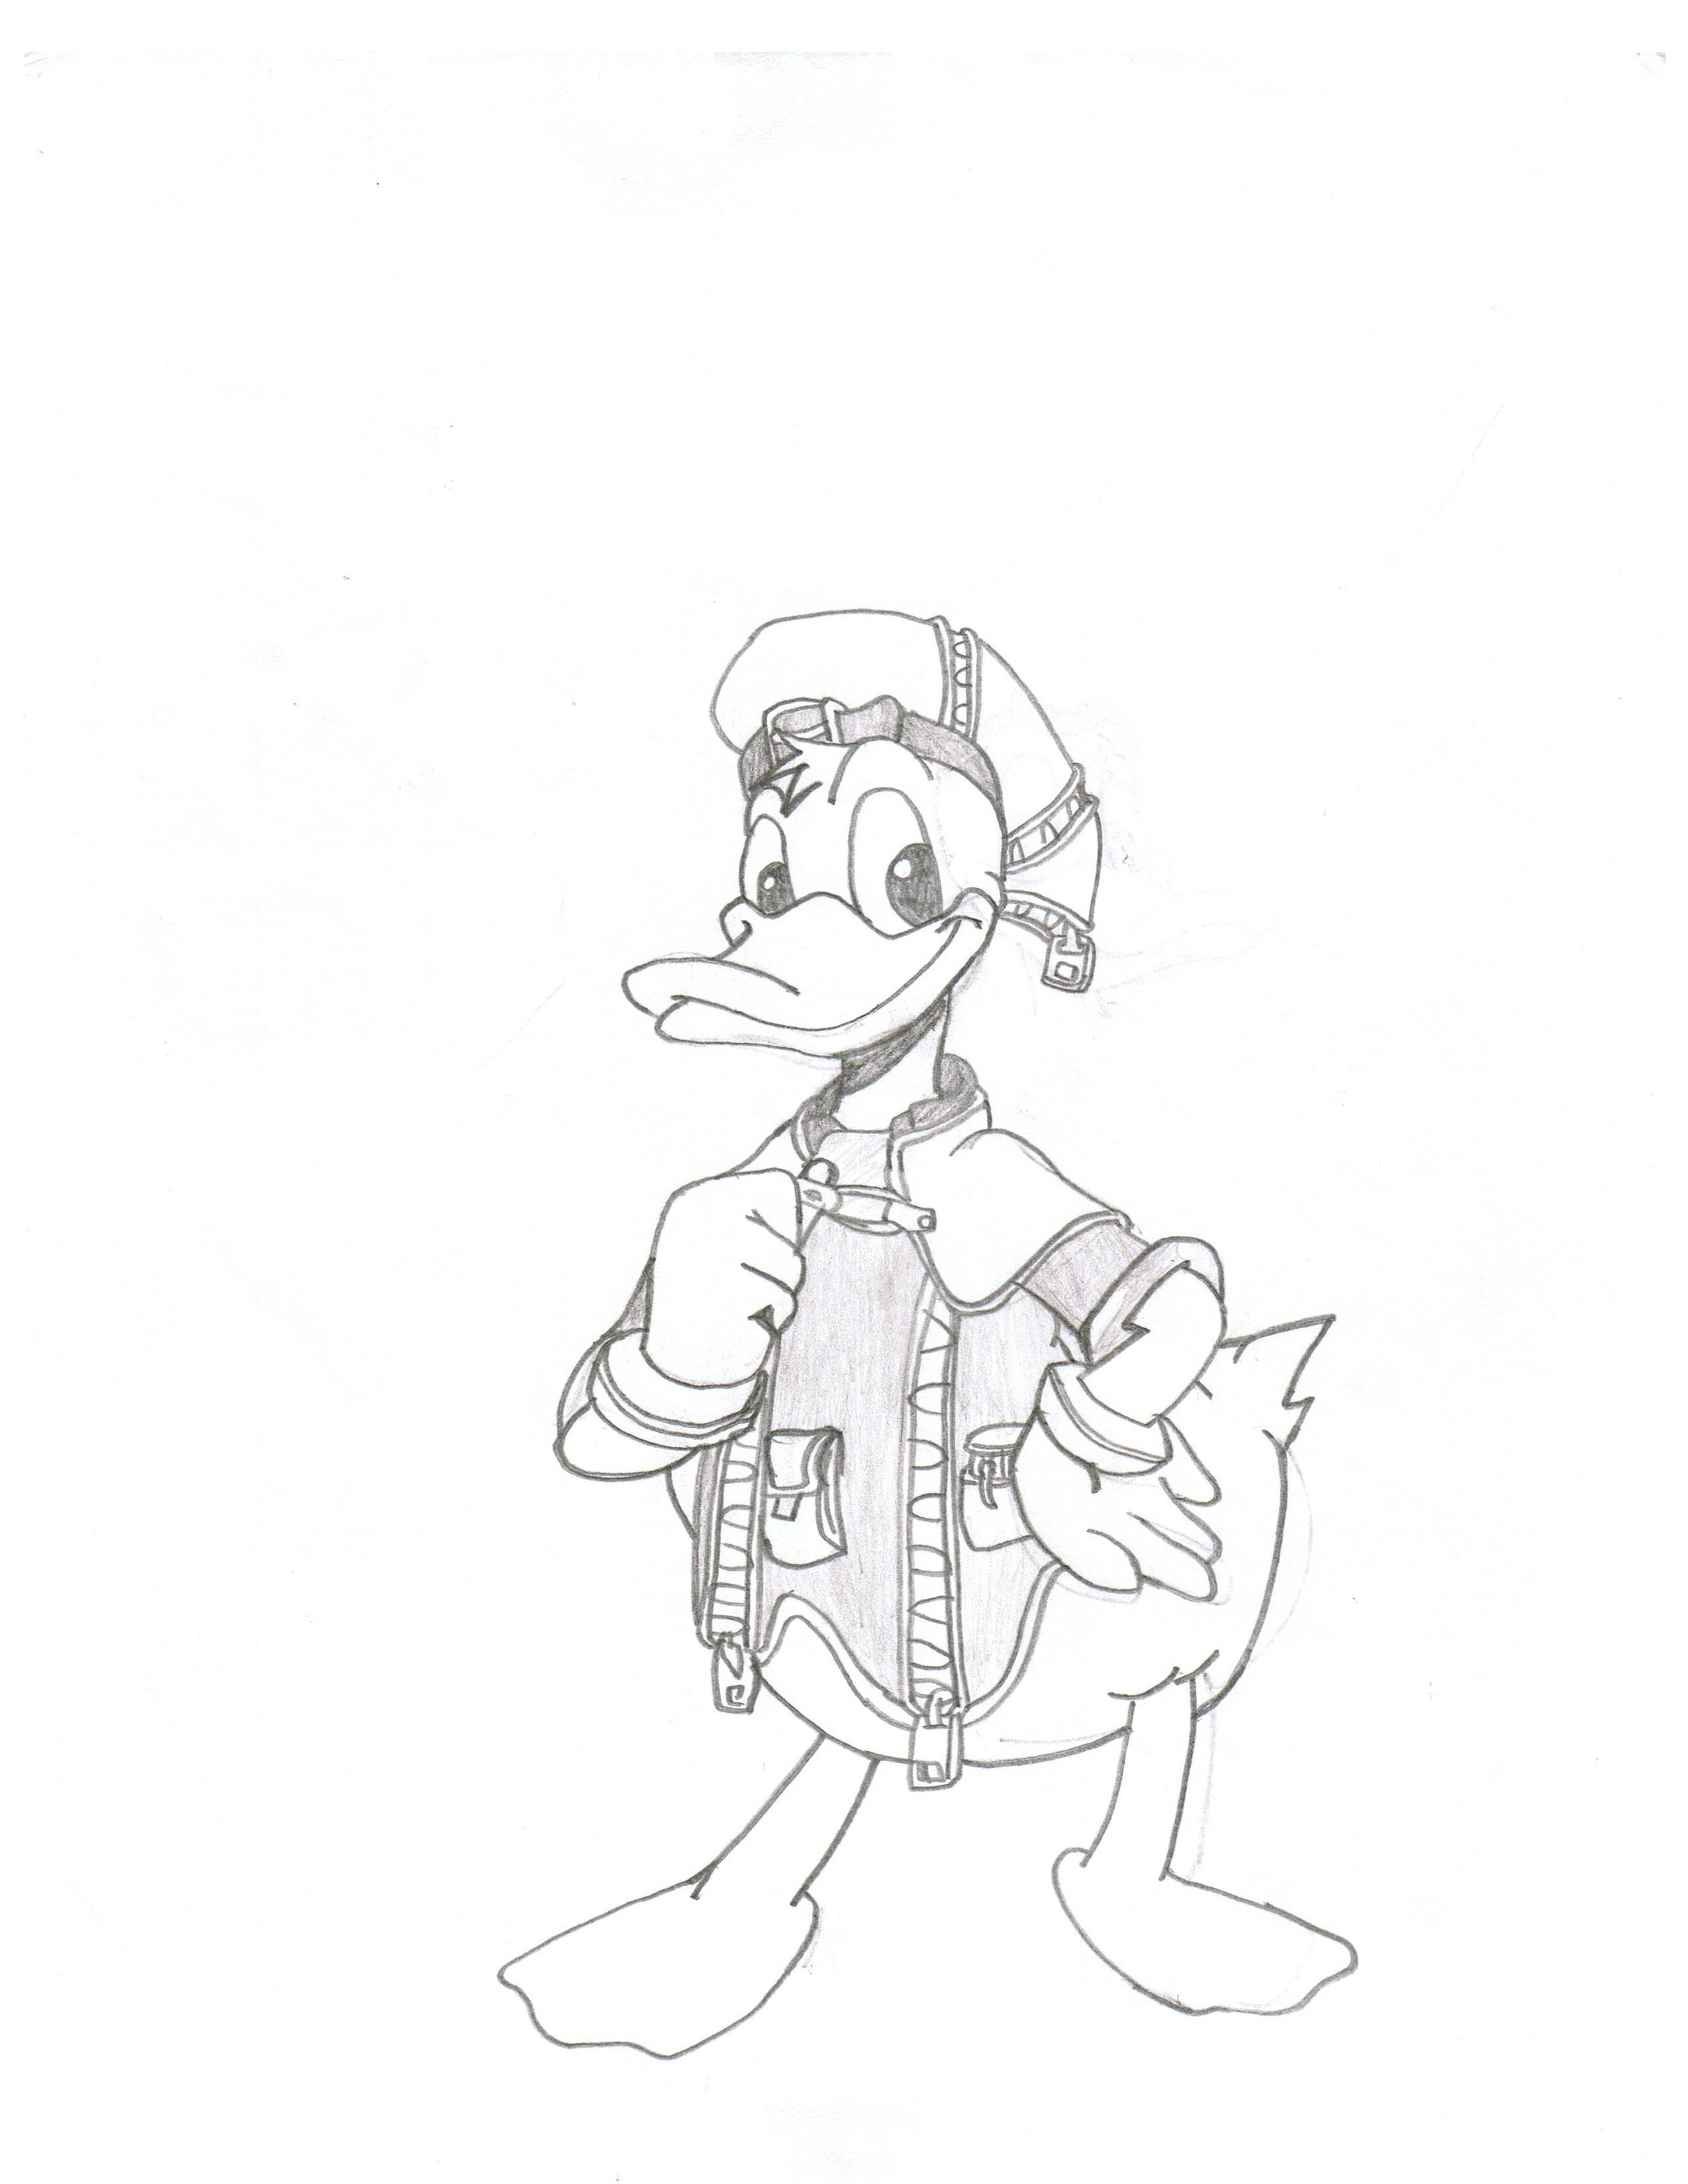 Donald duck by kh2_SORA_kidd63